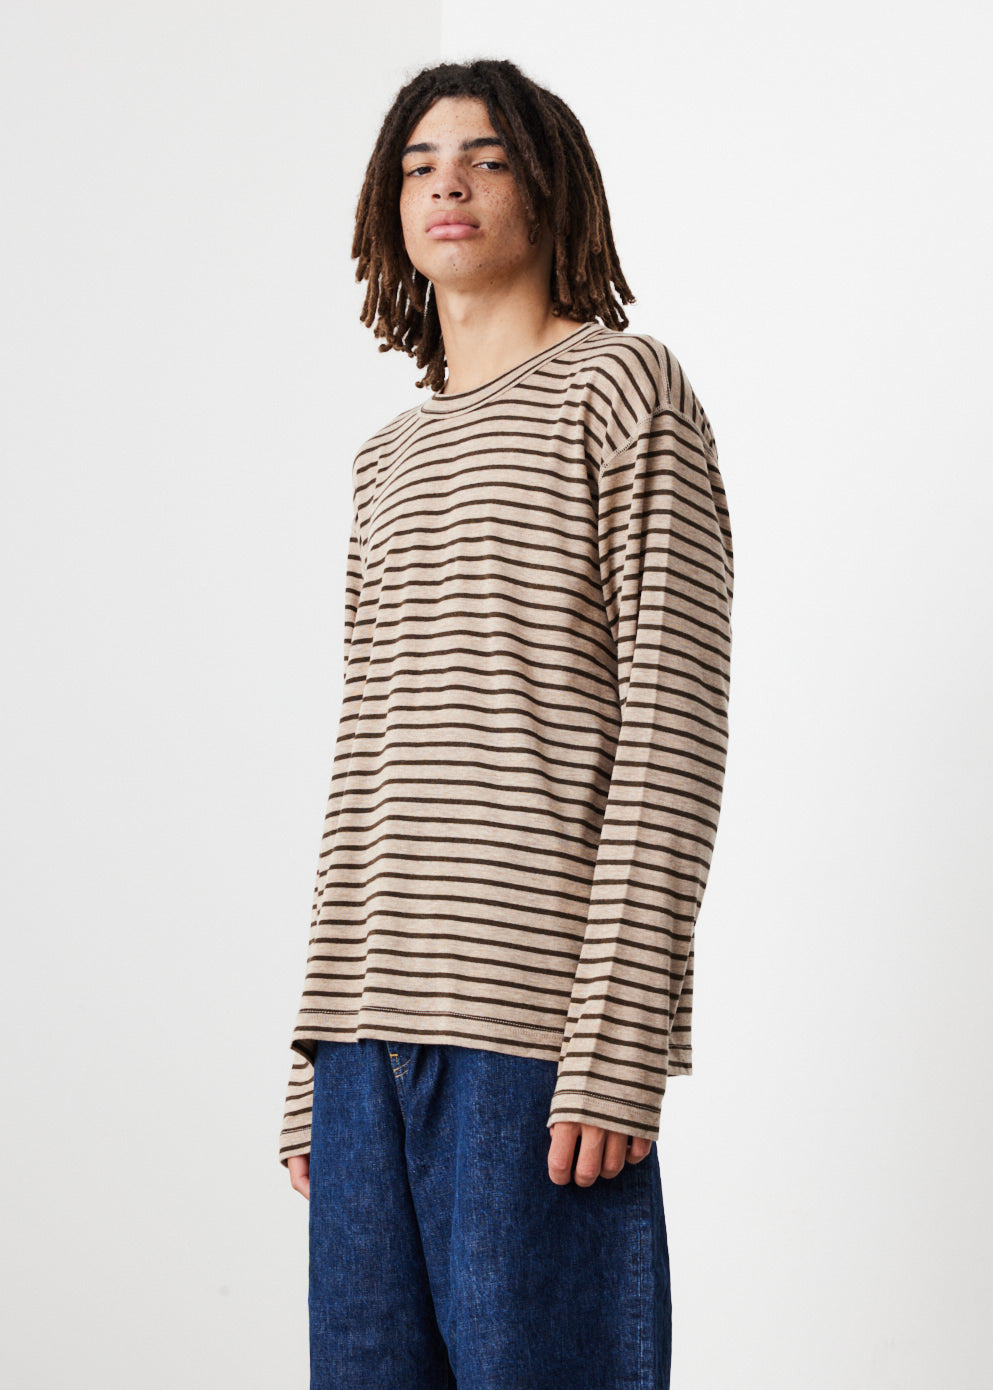 Striped Knit T-Shirt